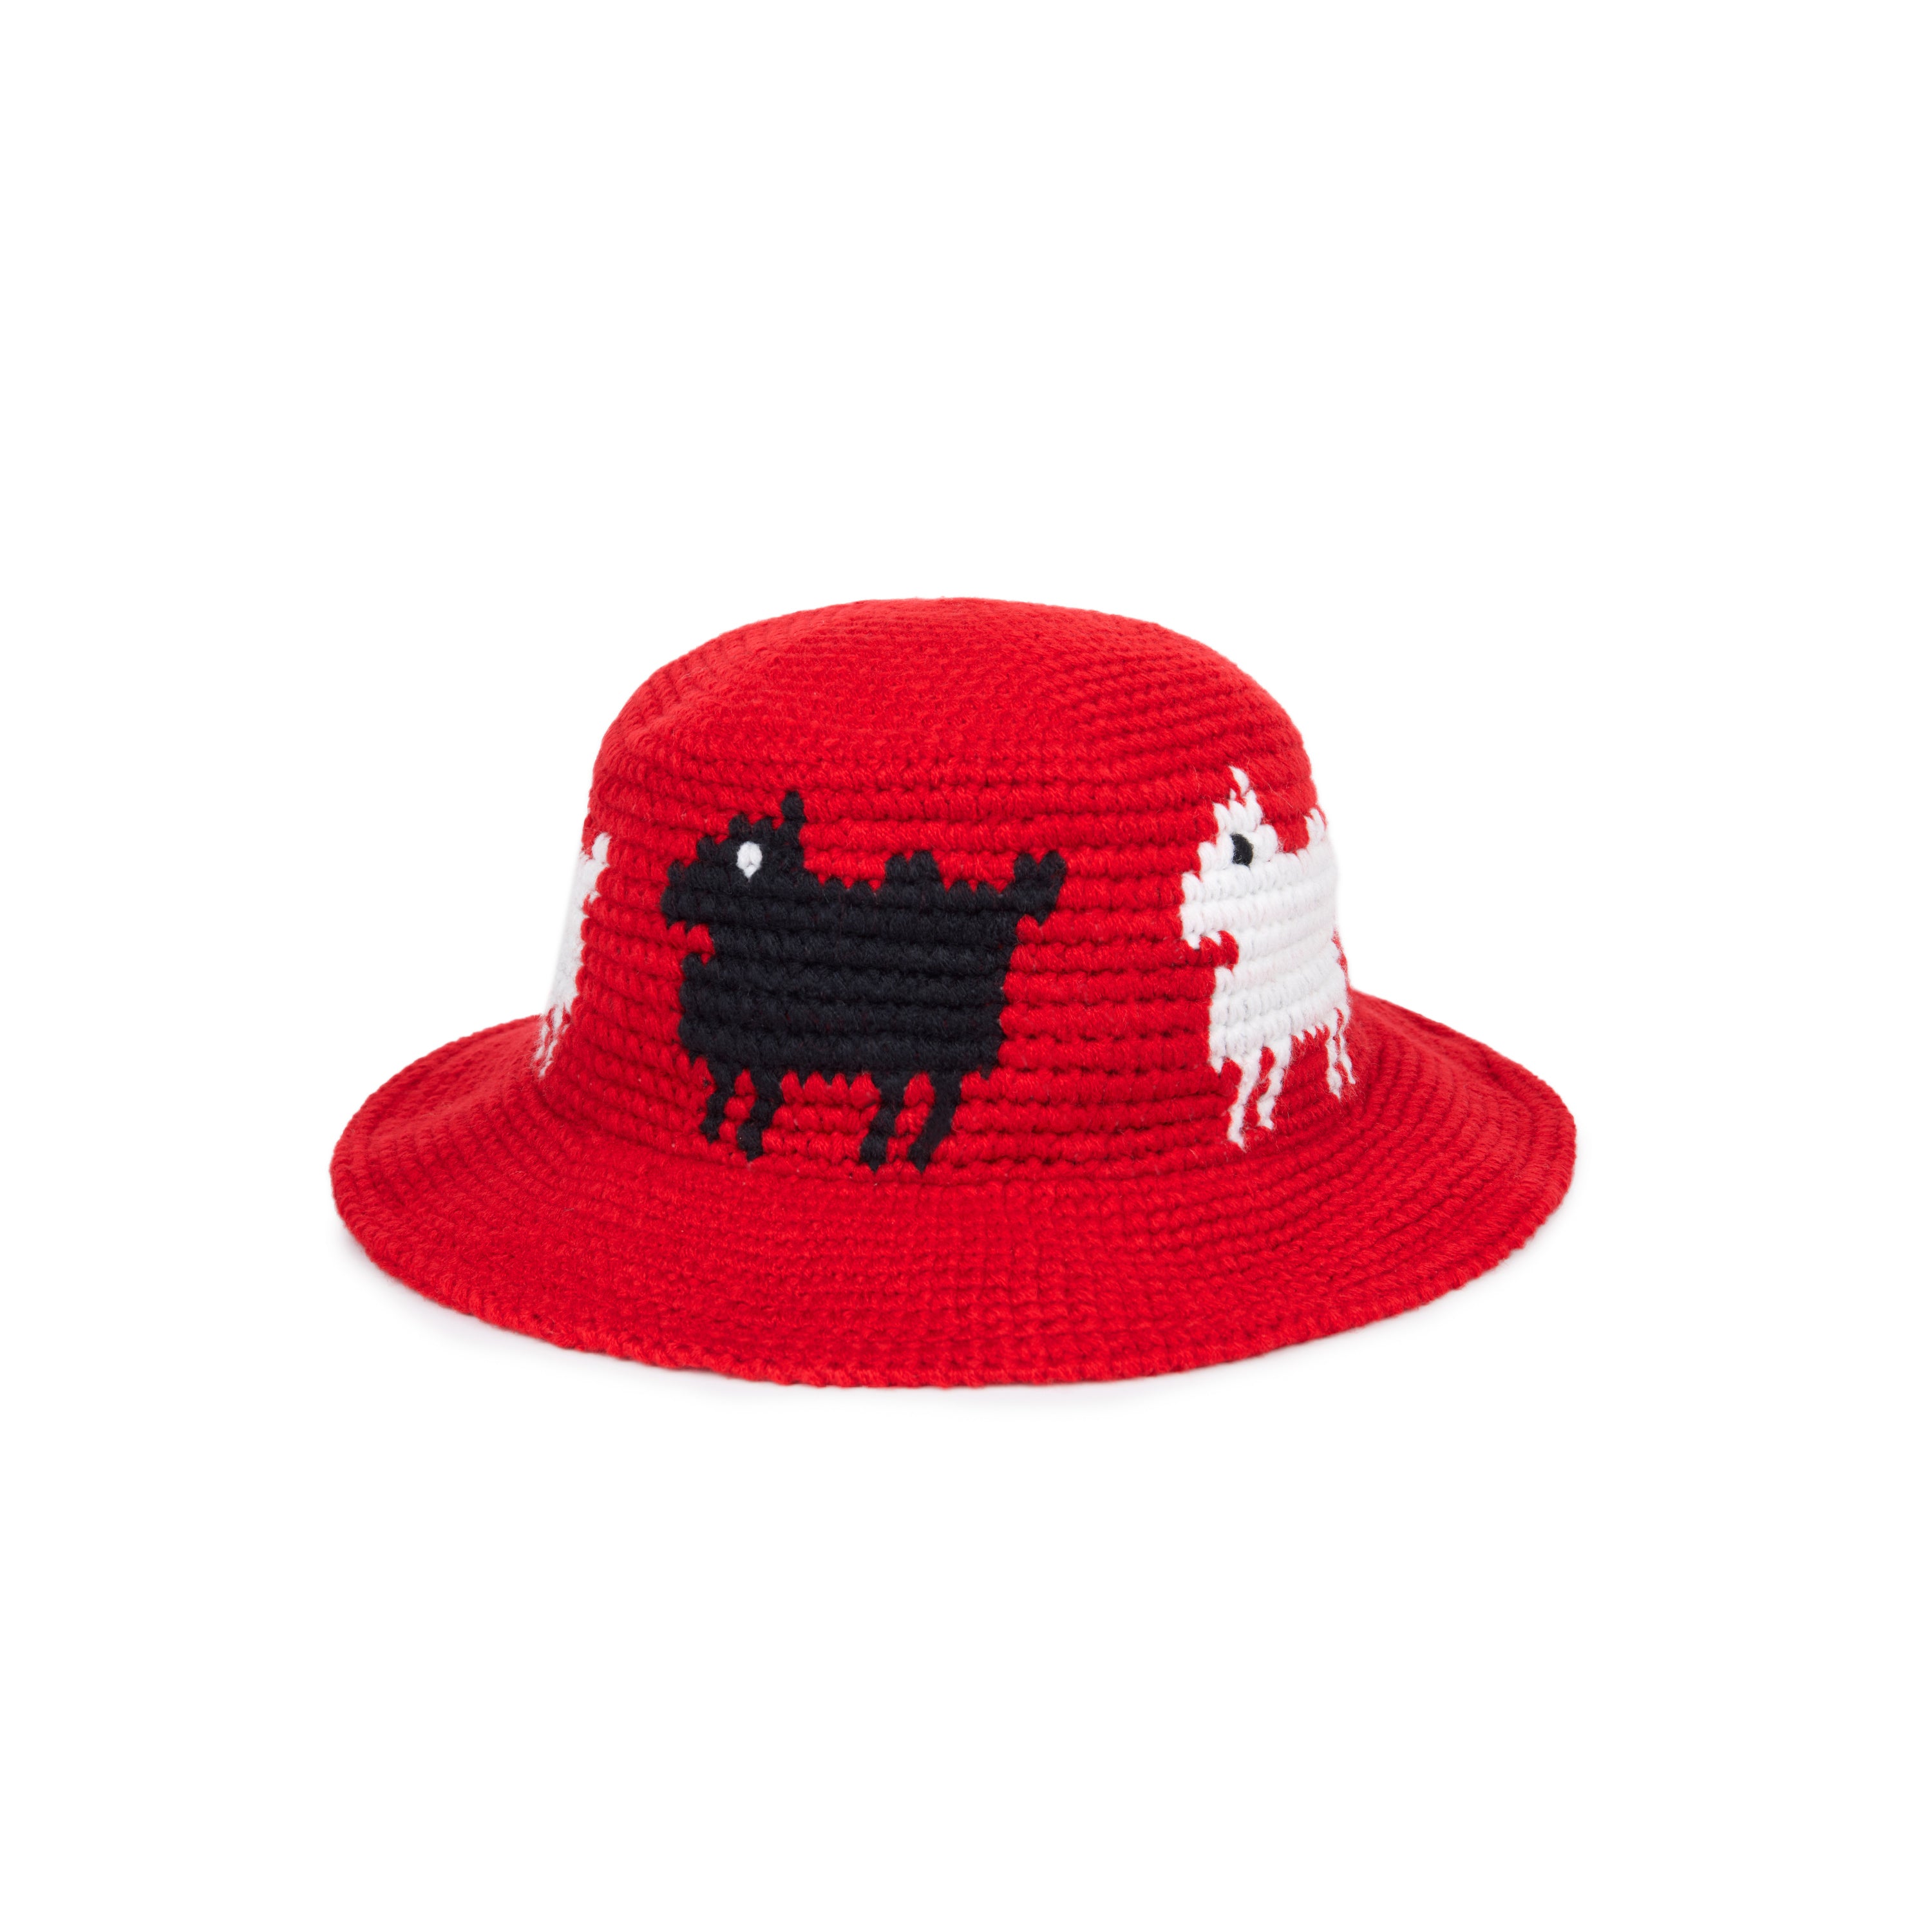 Warm & Wonderful Crocheted Bucket Hat